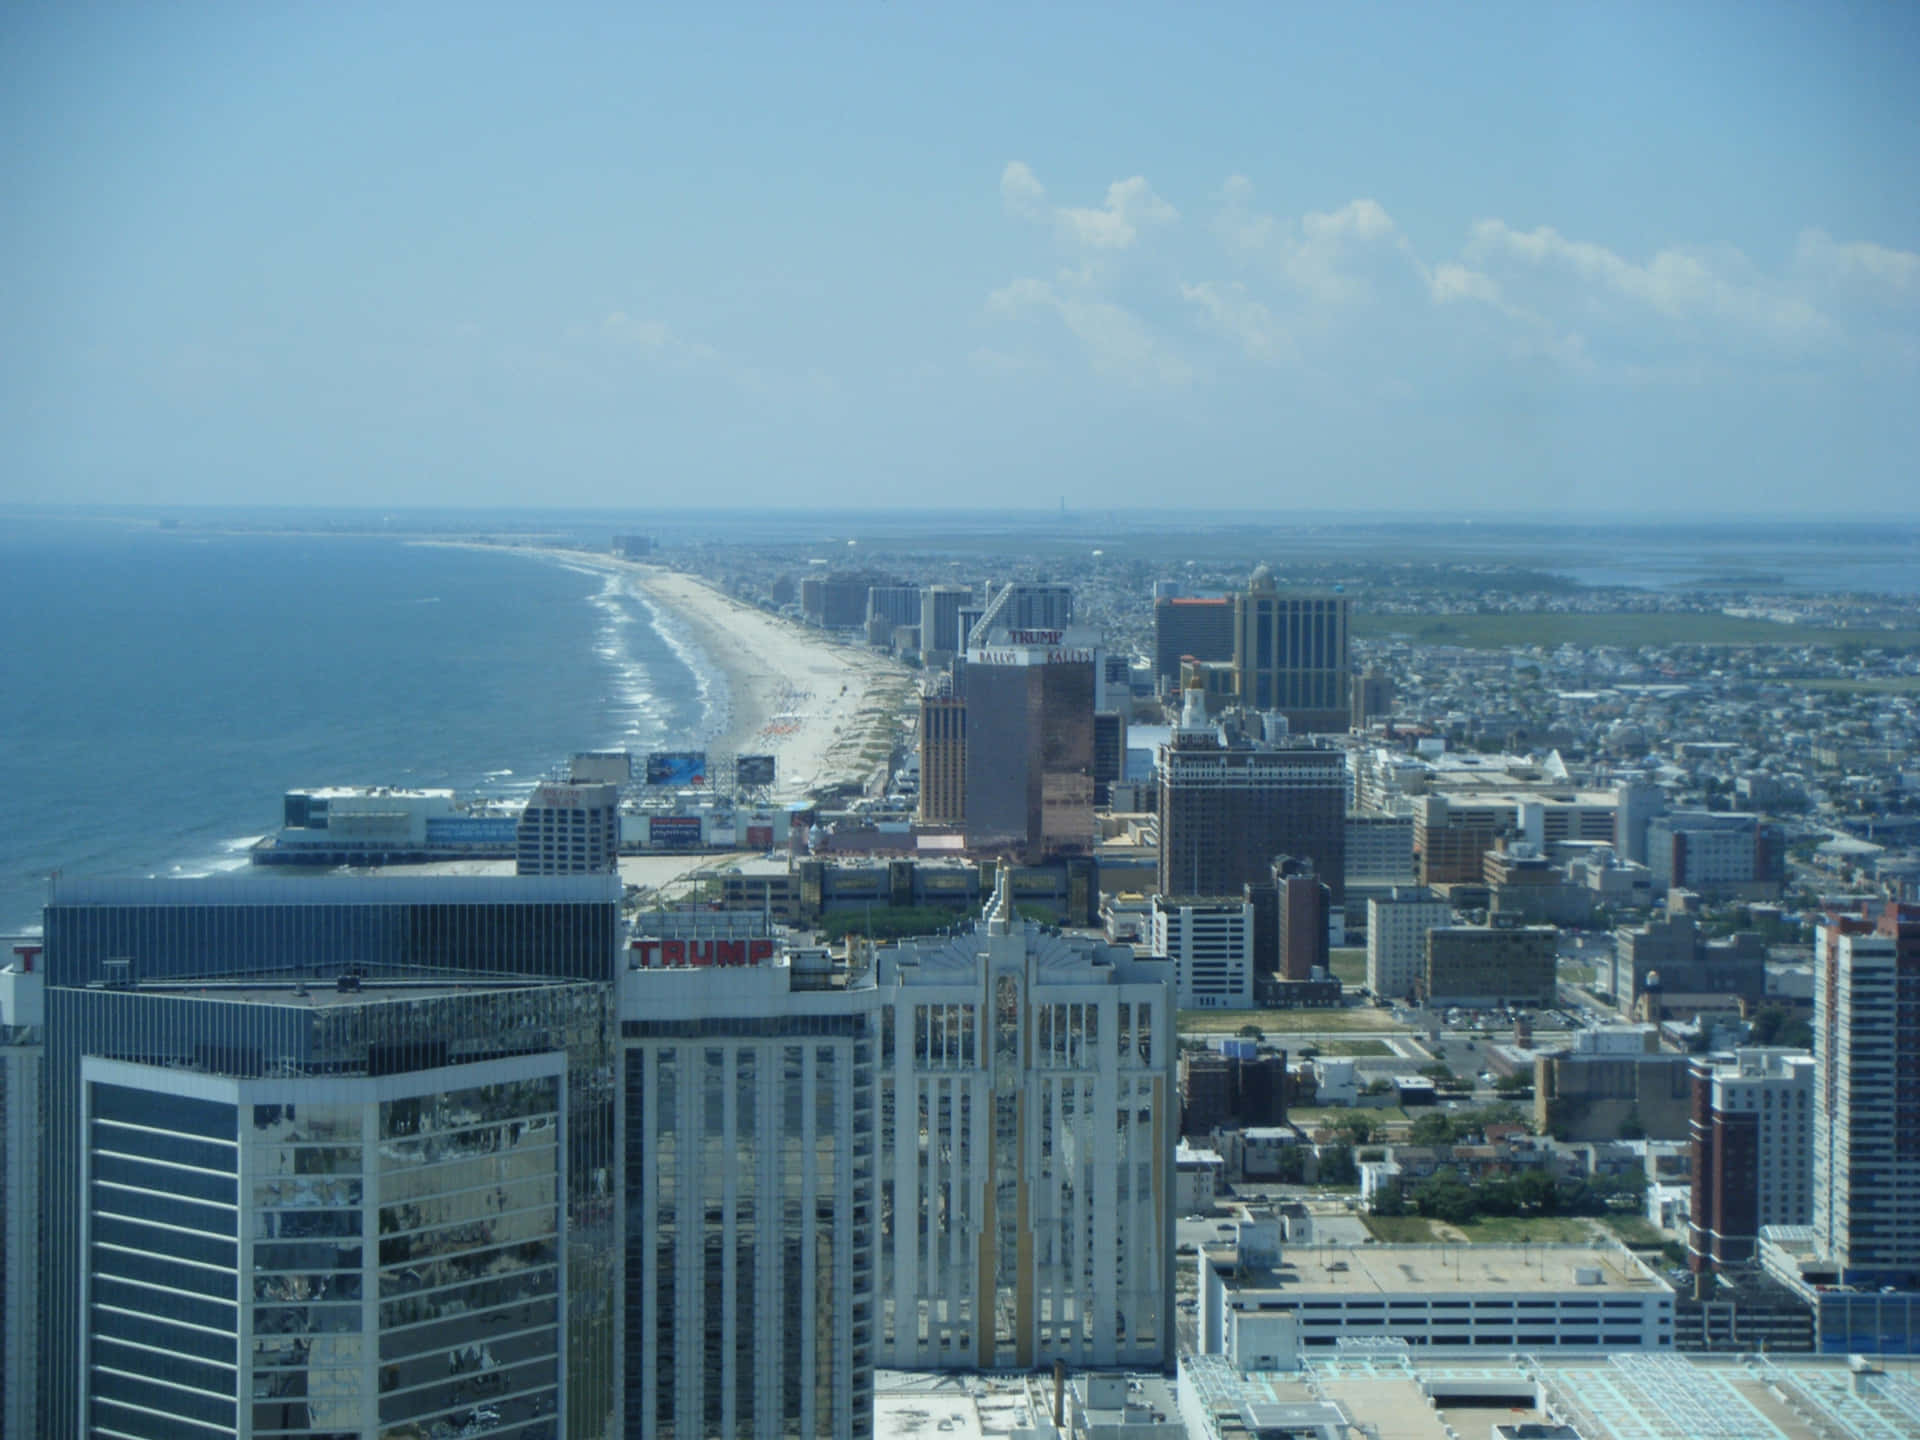 Atlantic City Buildings And Ocean Picture